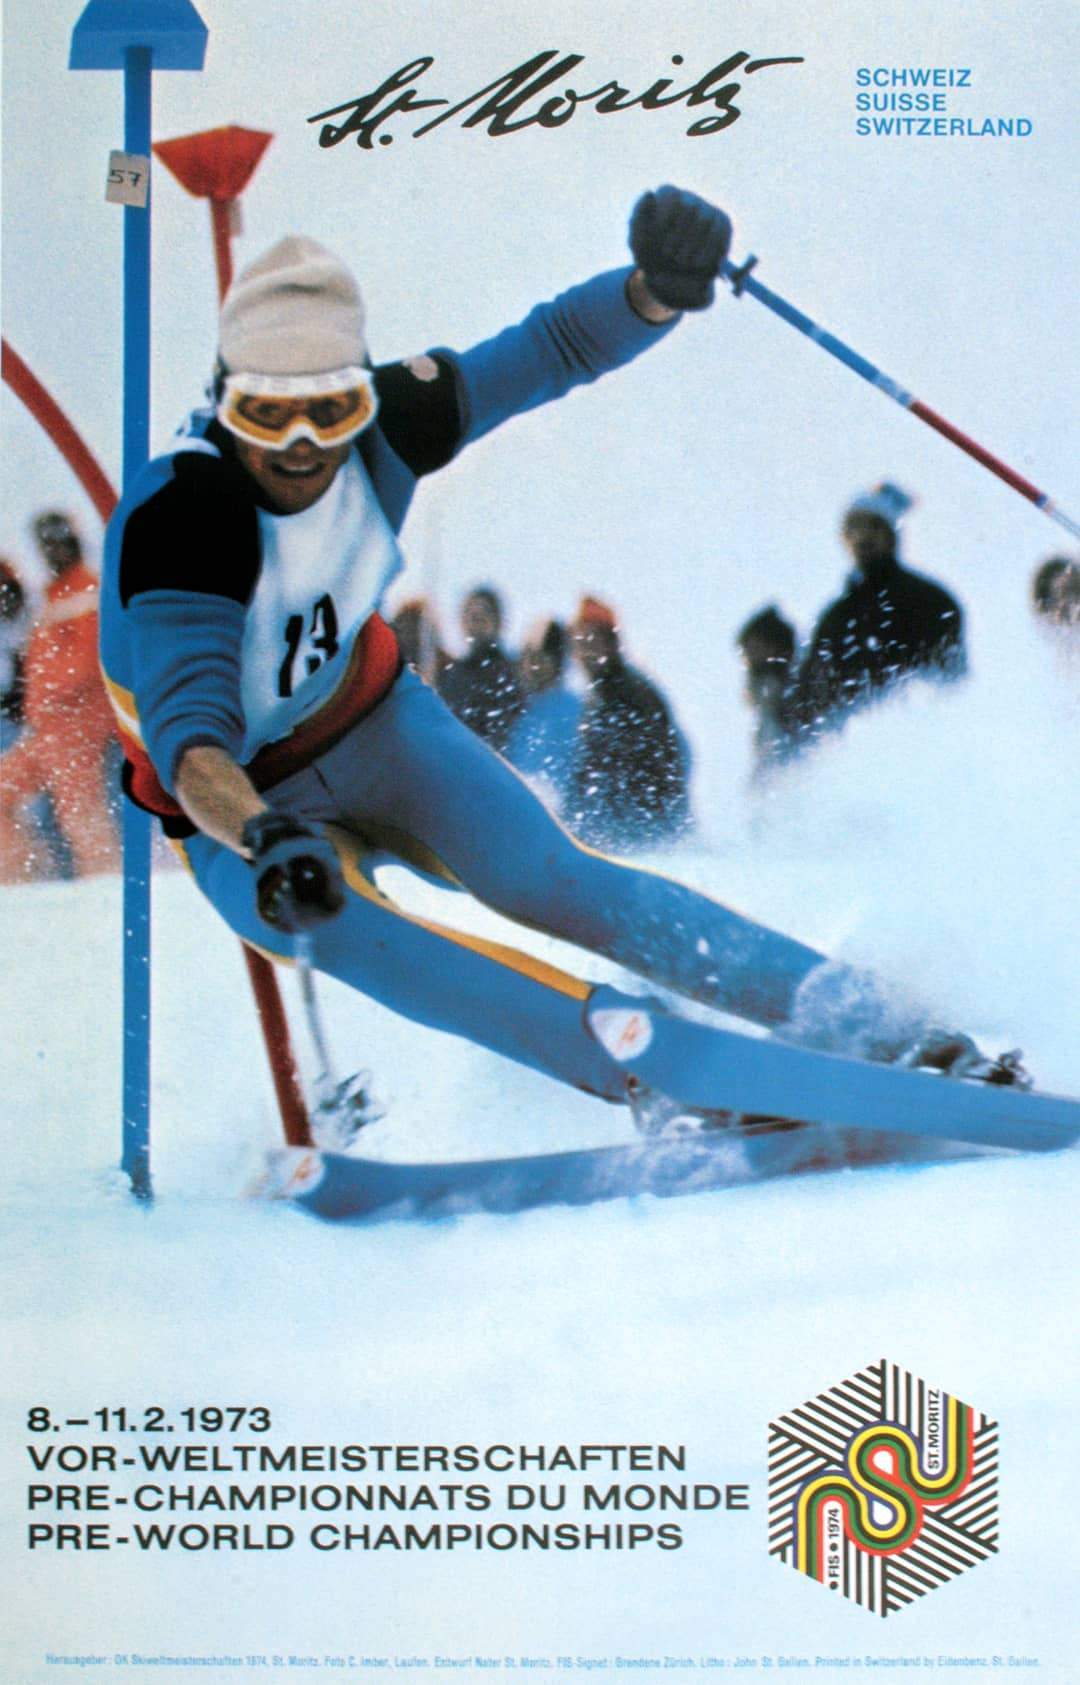 Original Vintage Swiss Ski Poster 1973 for the Pre World Championship